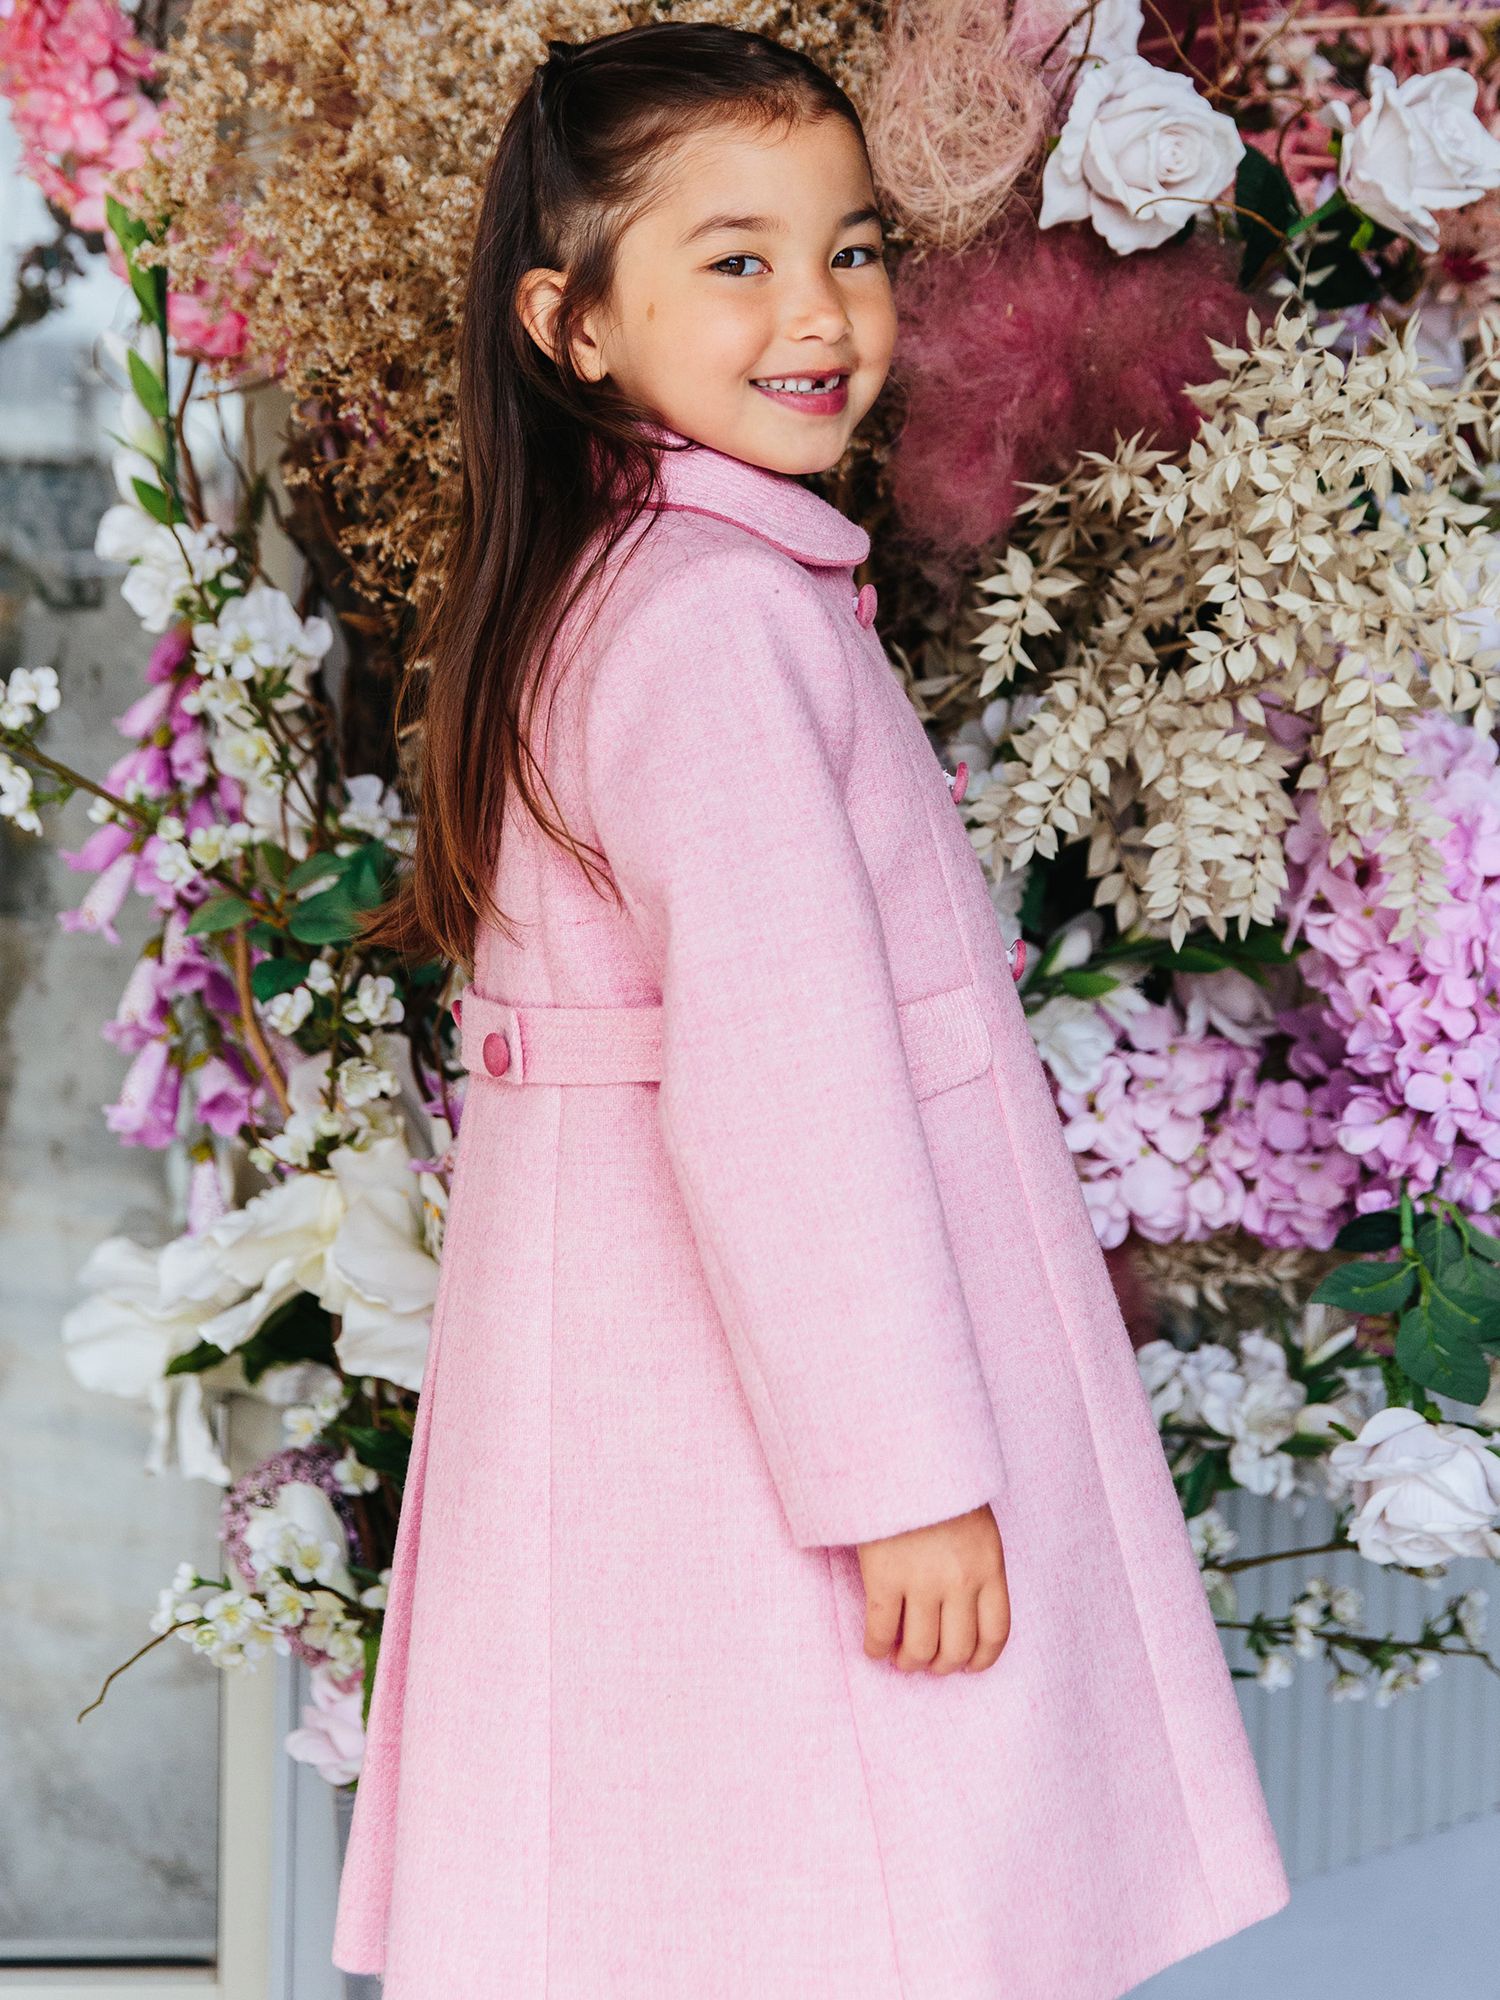 Trotters Kids' Classic Wool Longline Coat, Pink, 2 years